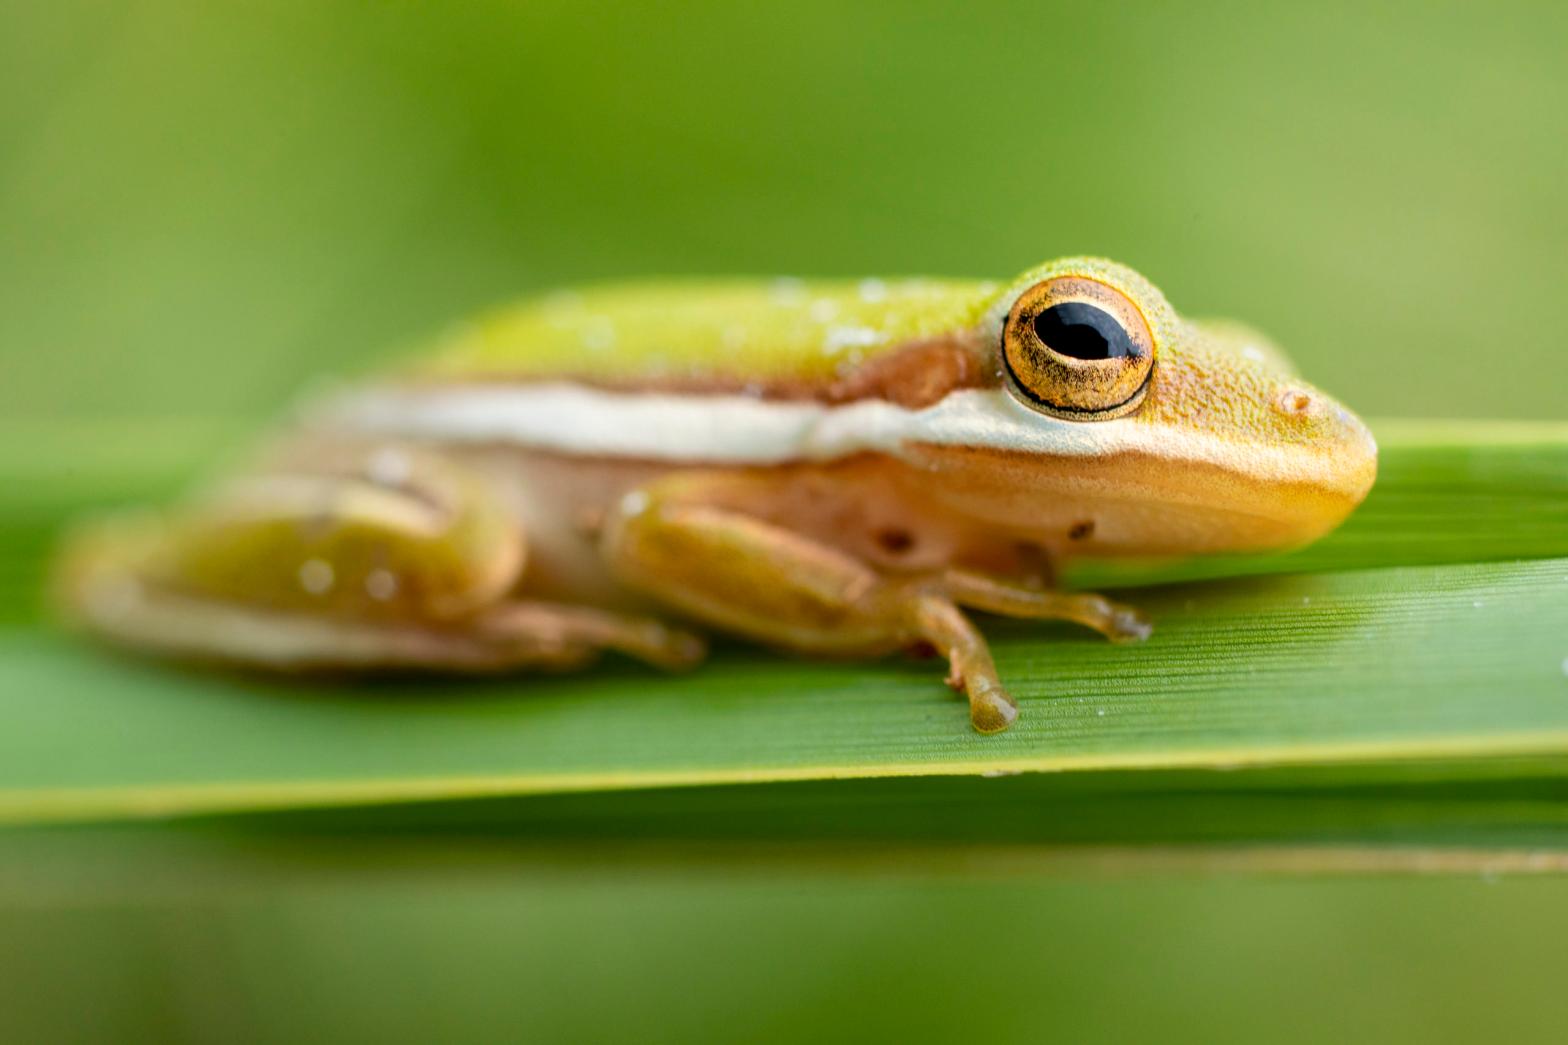 A frog photographed at Merritt Island National Wildlife Refuge, Florida. (Photo: Ian Shive)